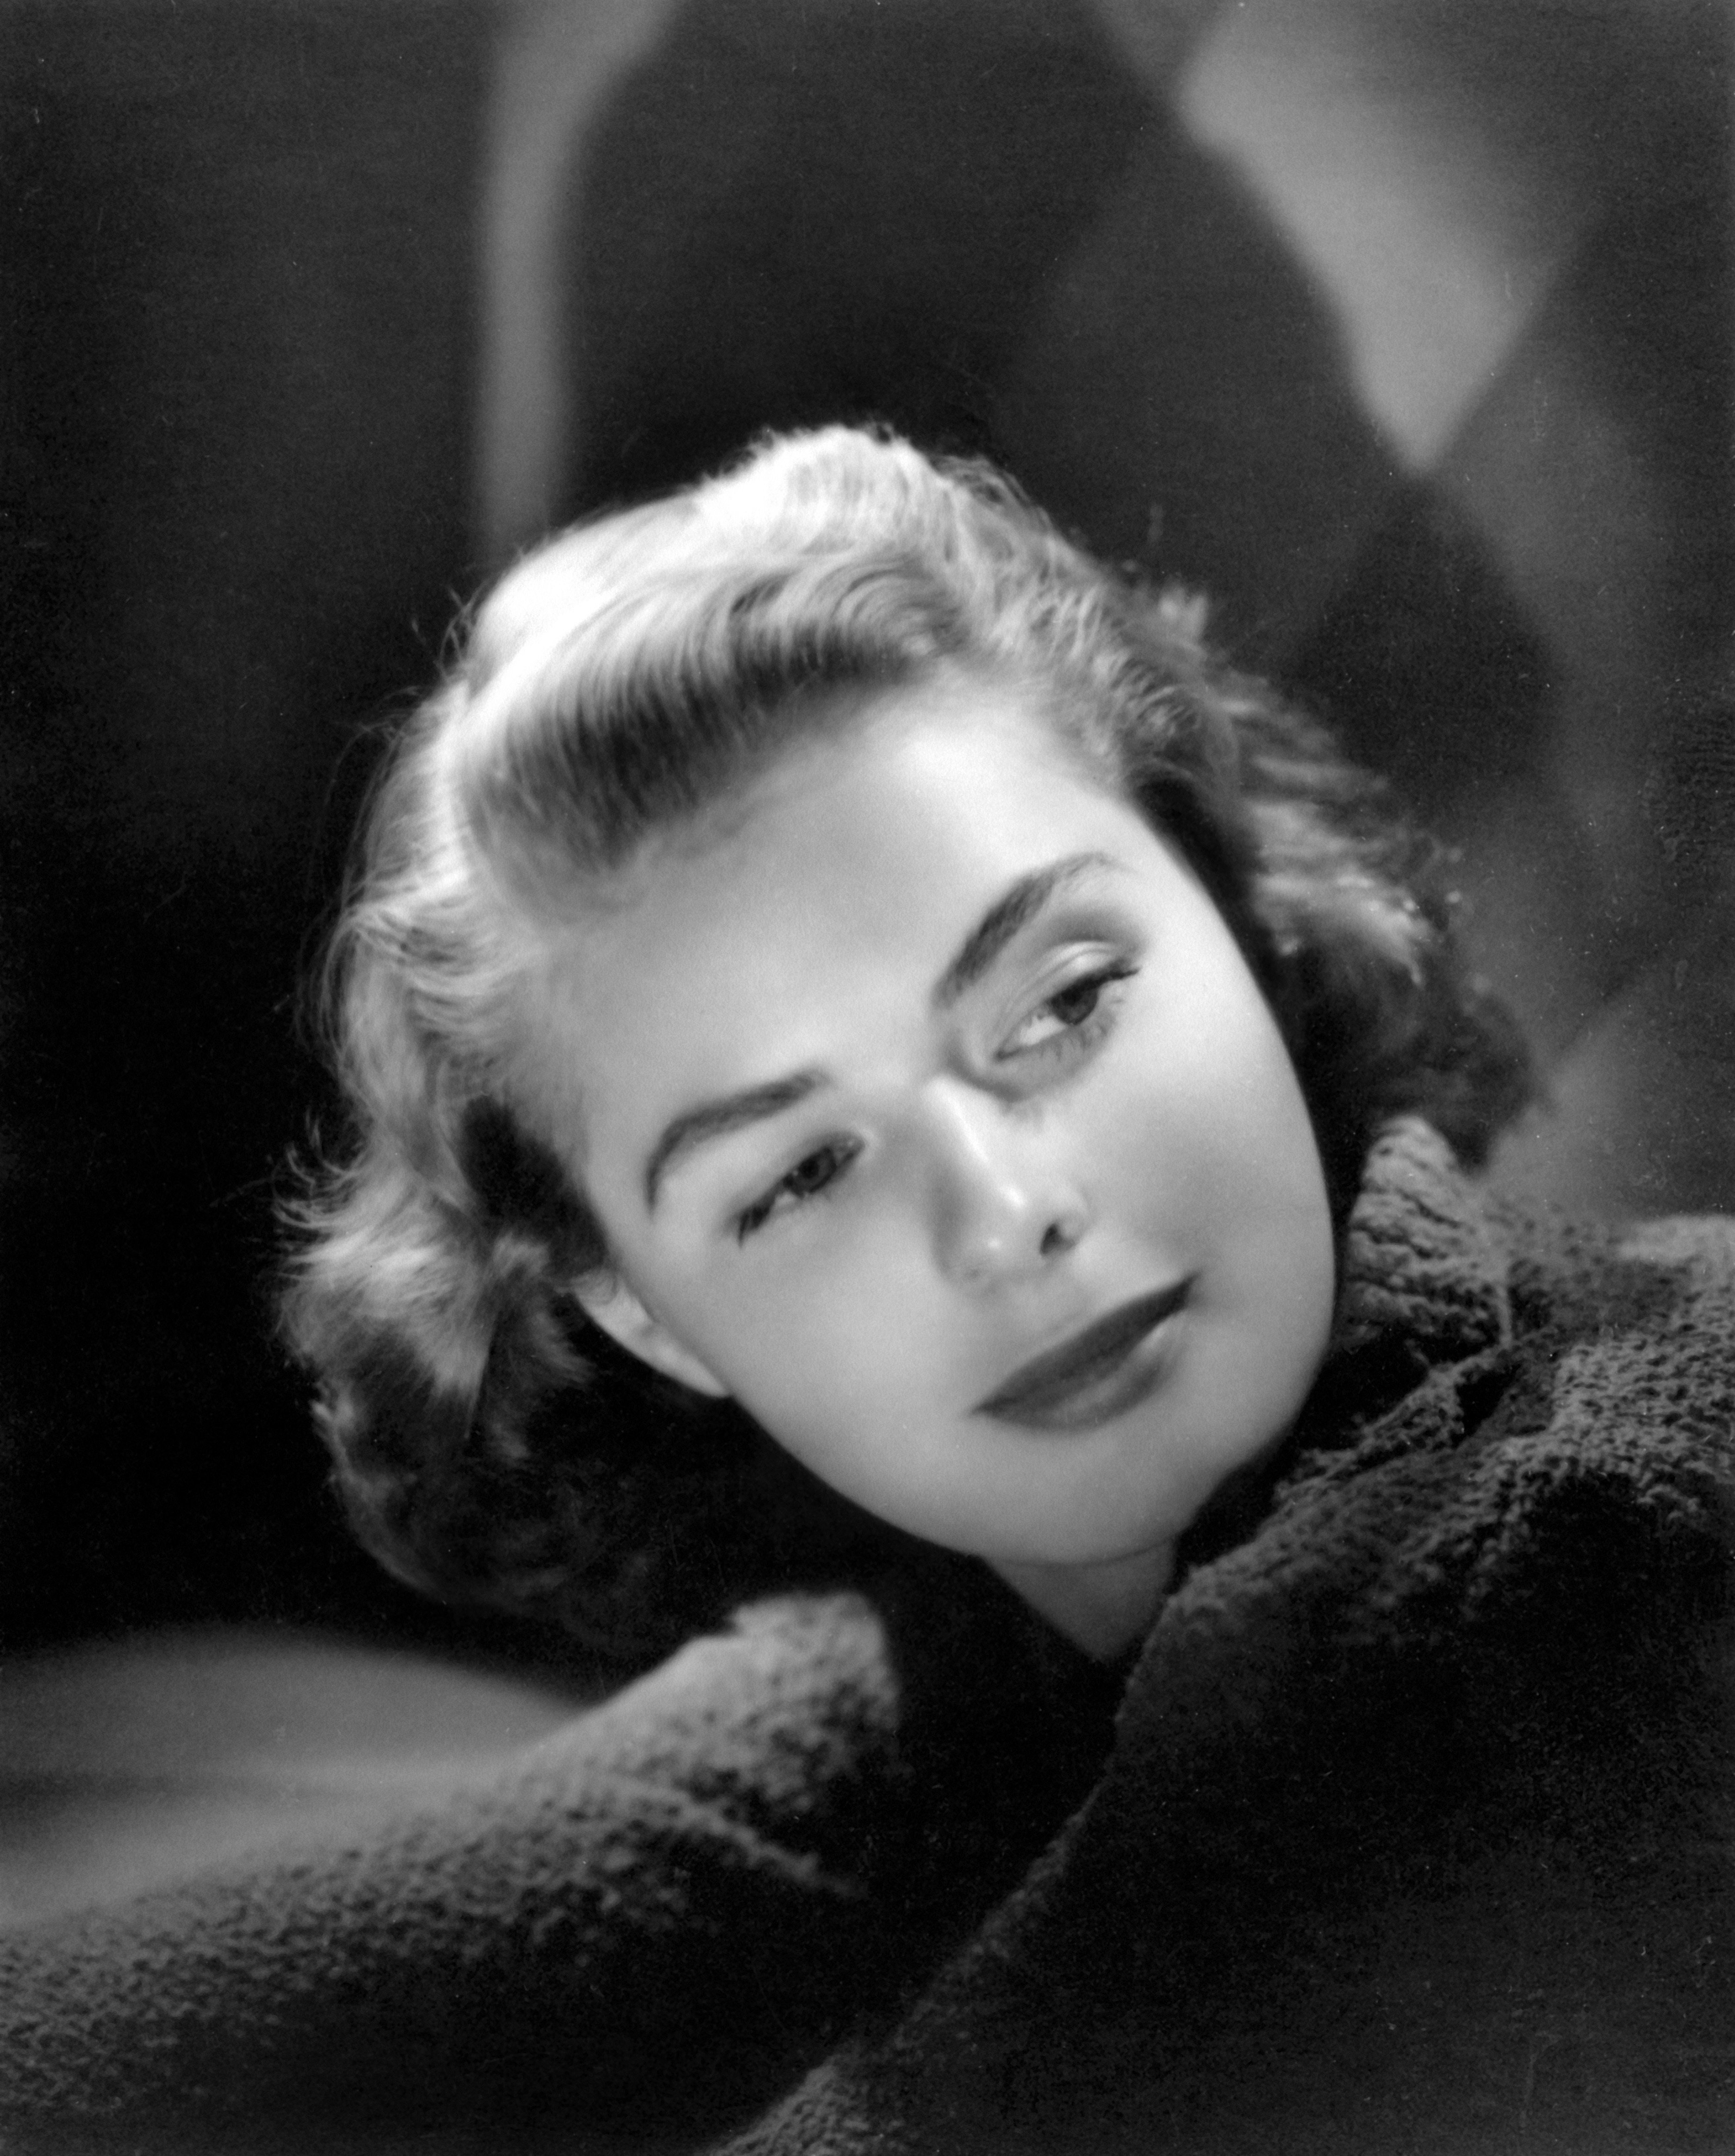 Actress Ingrid Bergman in the 1940s | Source: Getty Images